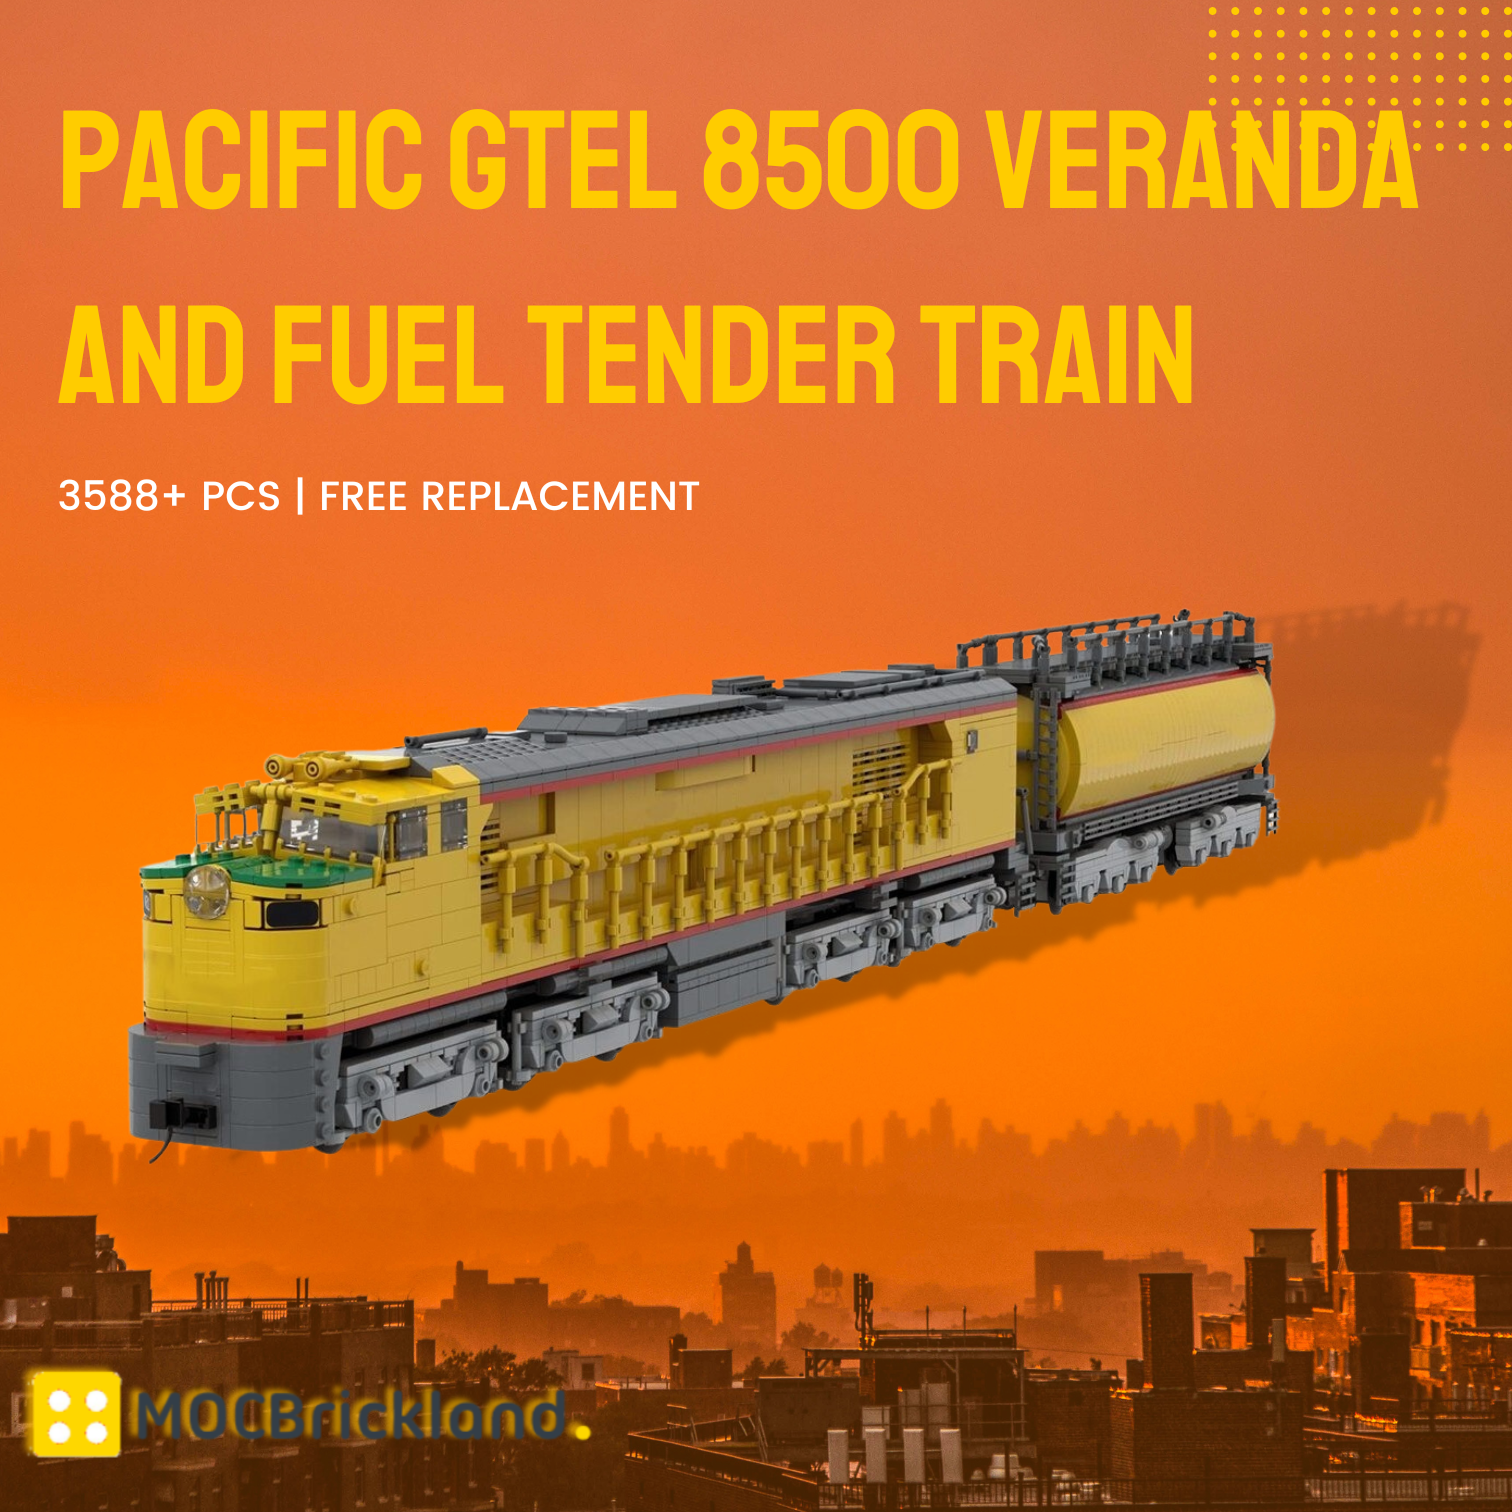 Technic MOC-118323 Pacific GTEL 8500 Veranda And Fuel Tender Train MOCBRICKLAND 